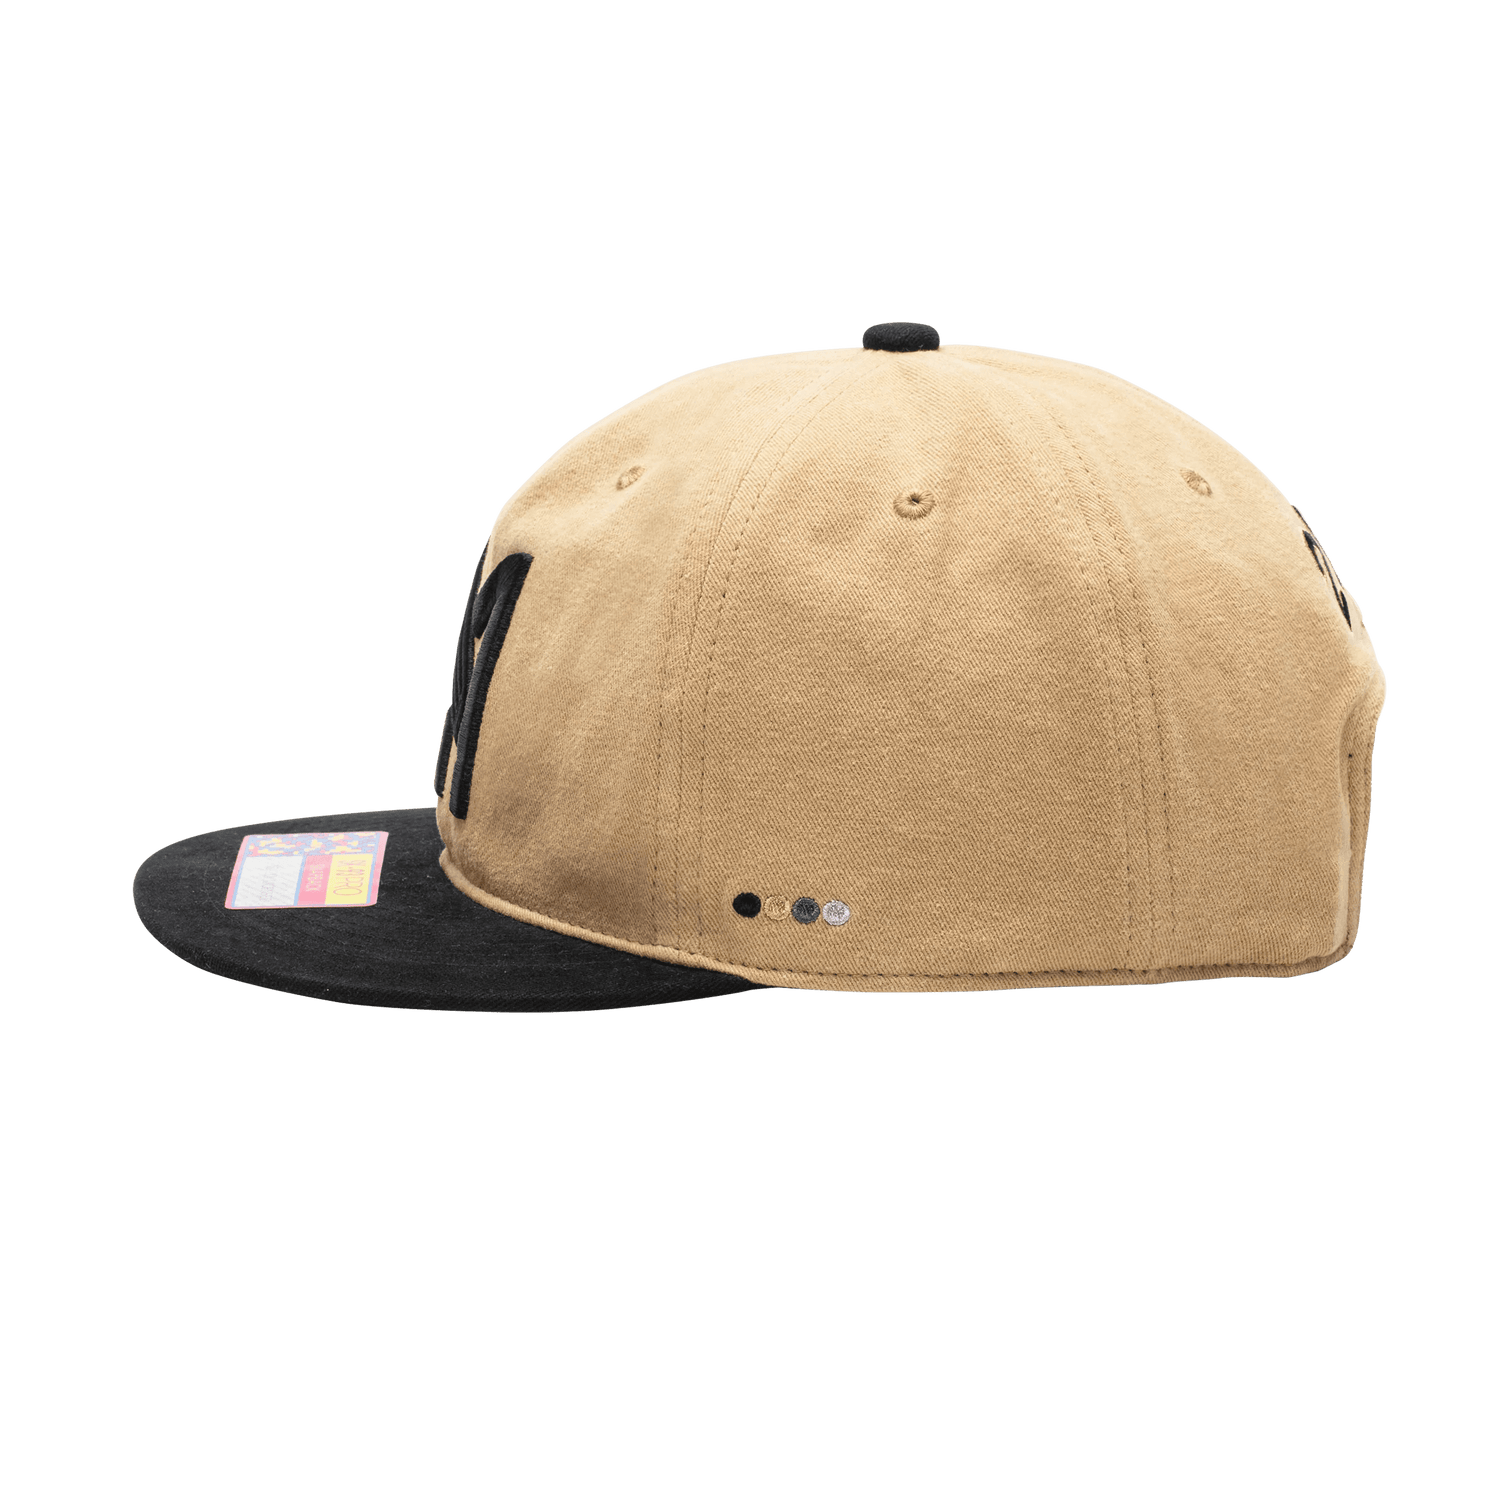 FI Collection LAFC Swingman Snapback Hat (Side 1)